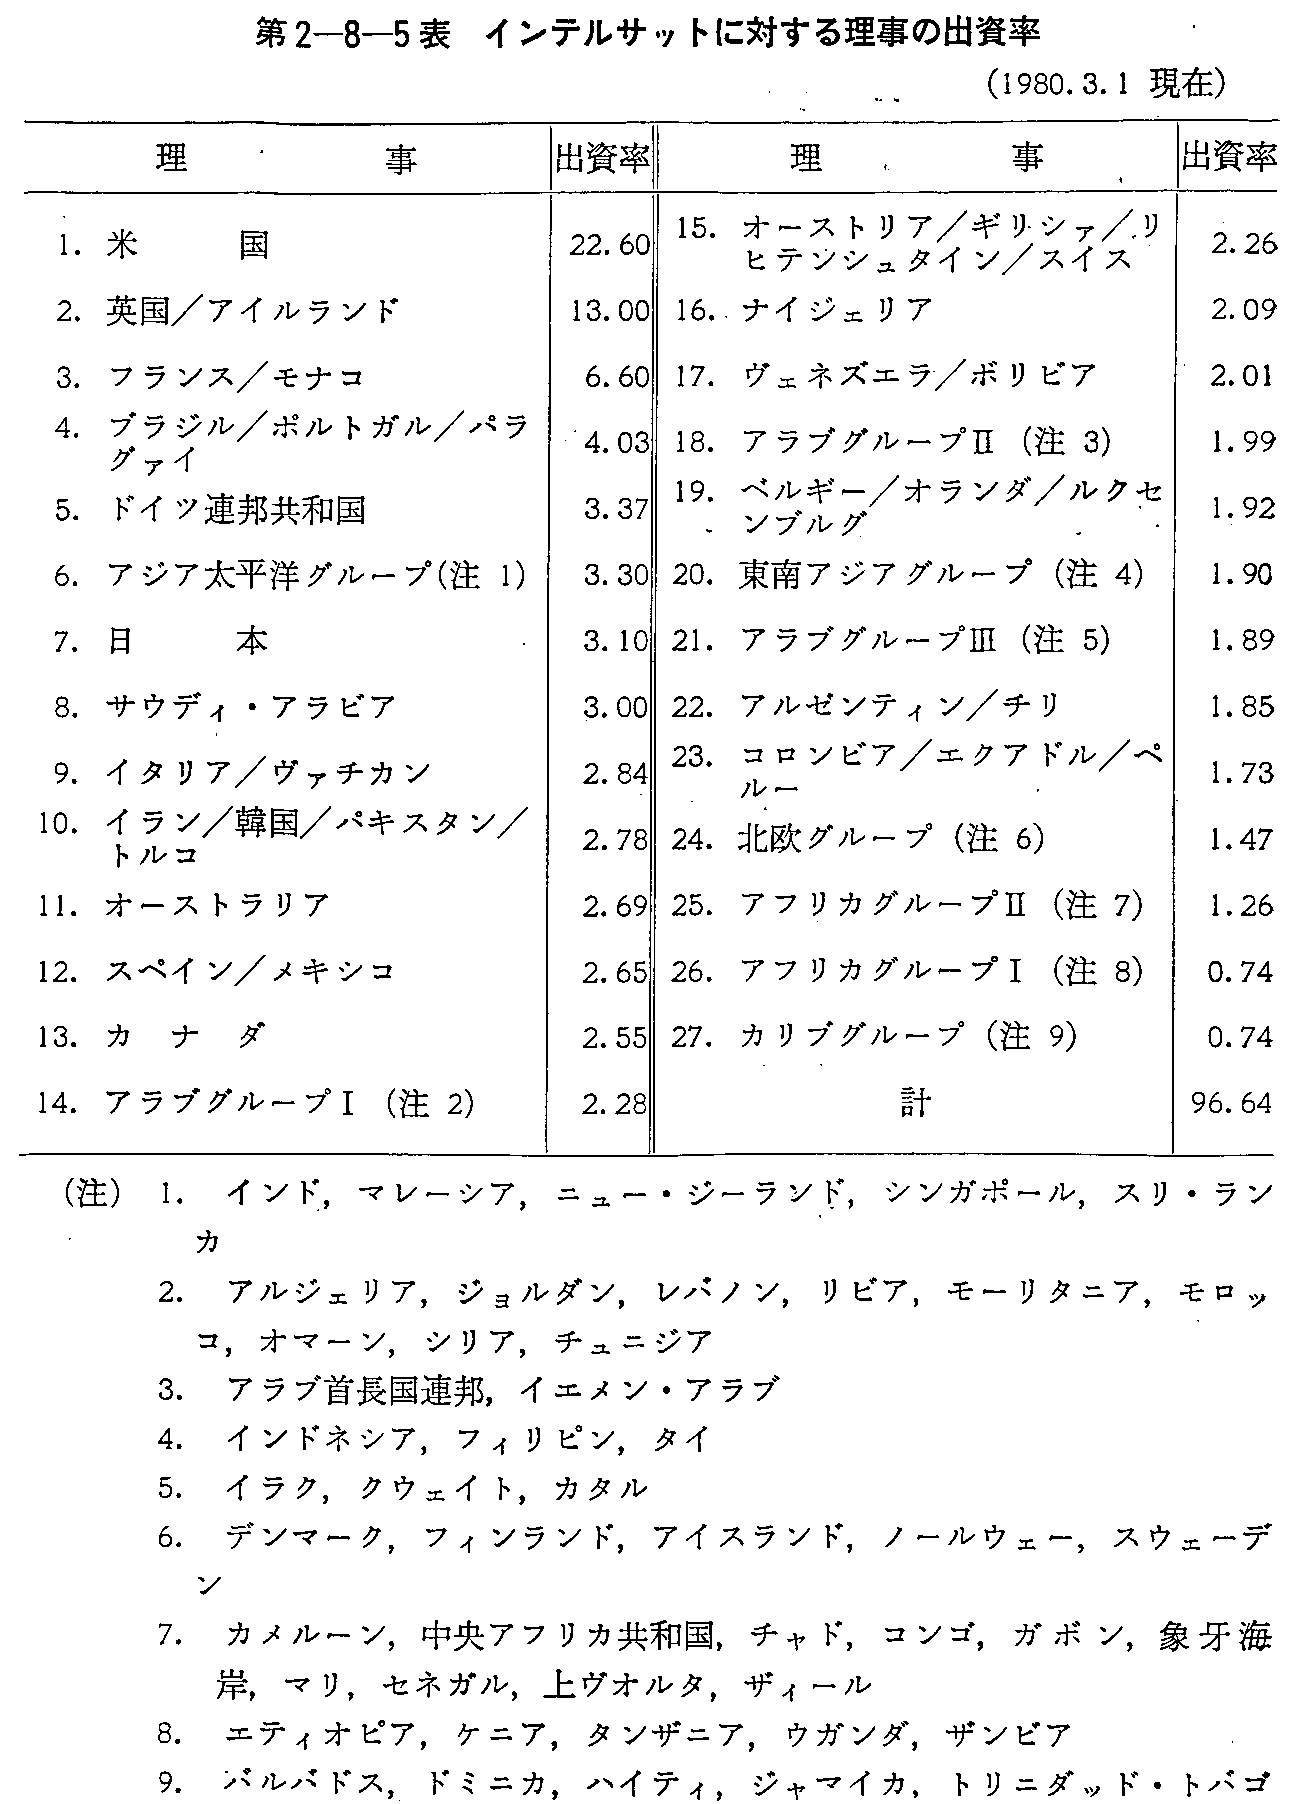 2-8-5\ CeTbgɑ΂闝̏o(1980.3.1)